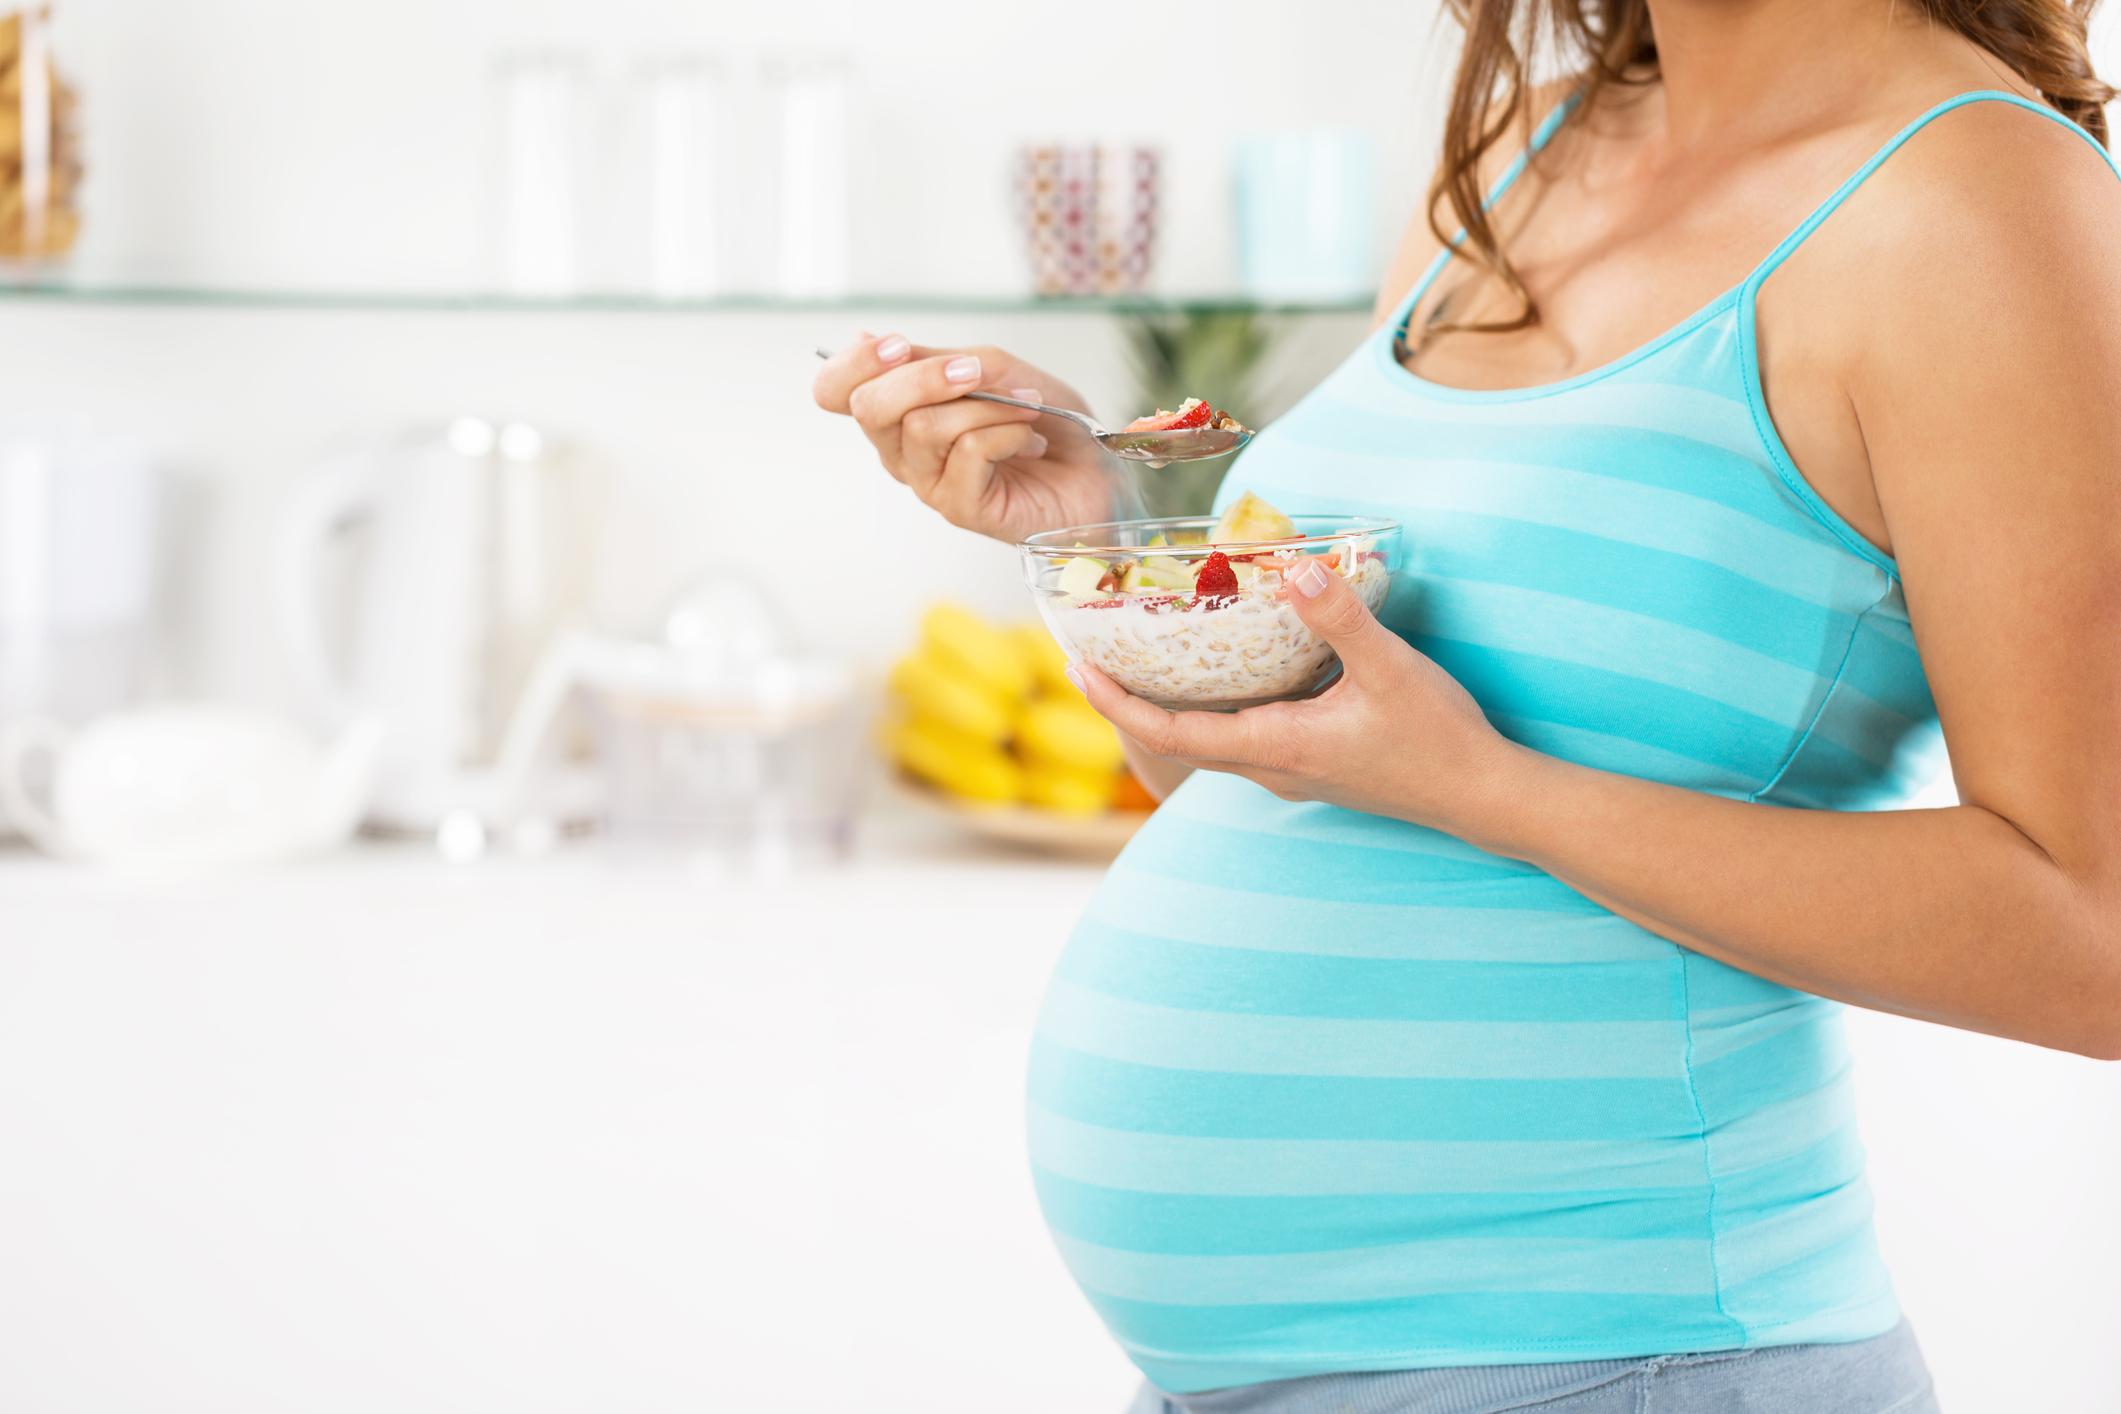 11 nutritional tips for breastfeeding moms #1